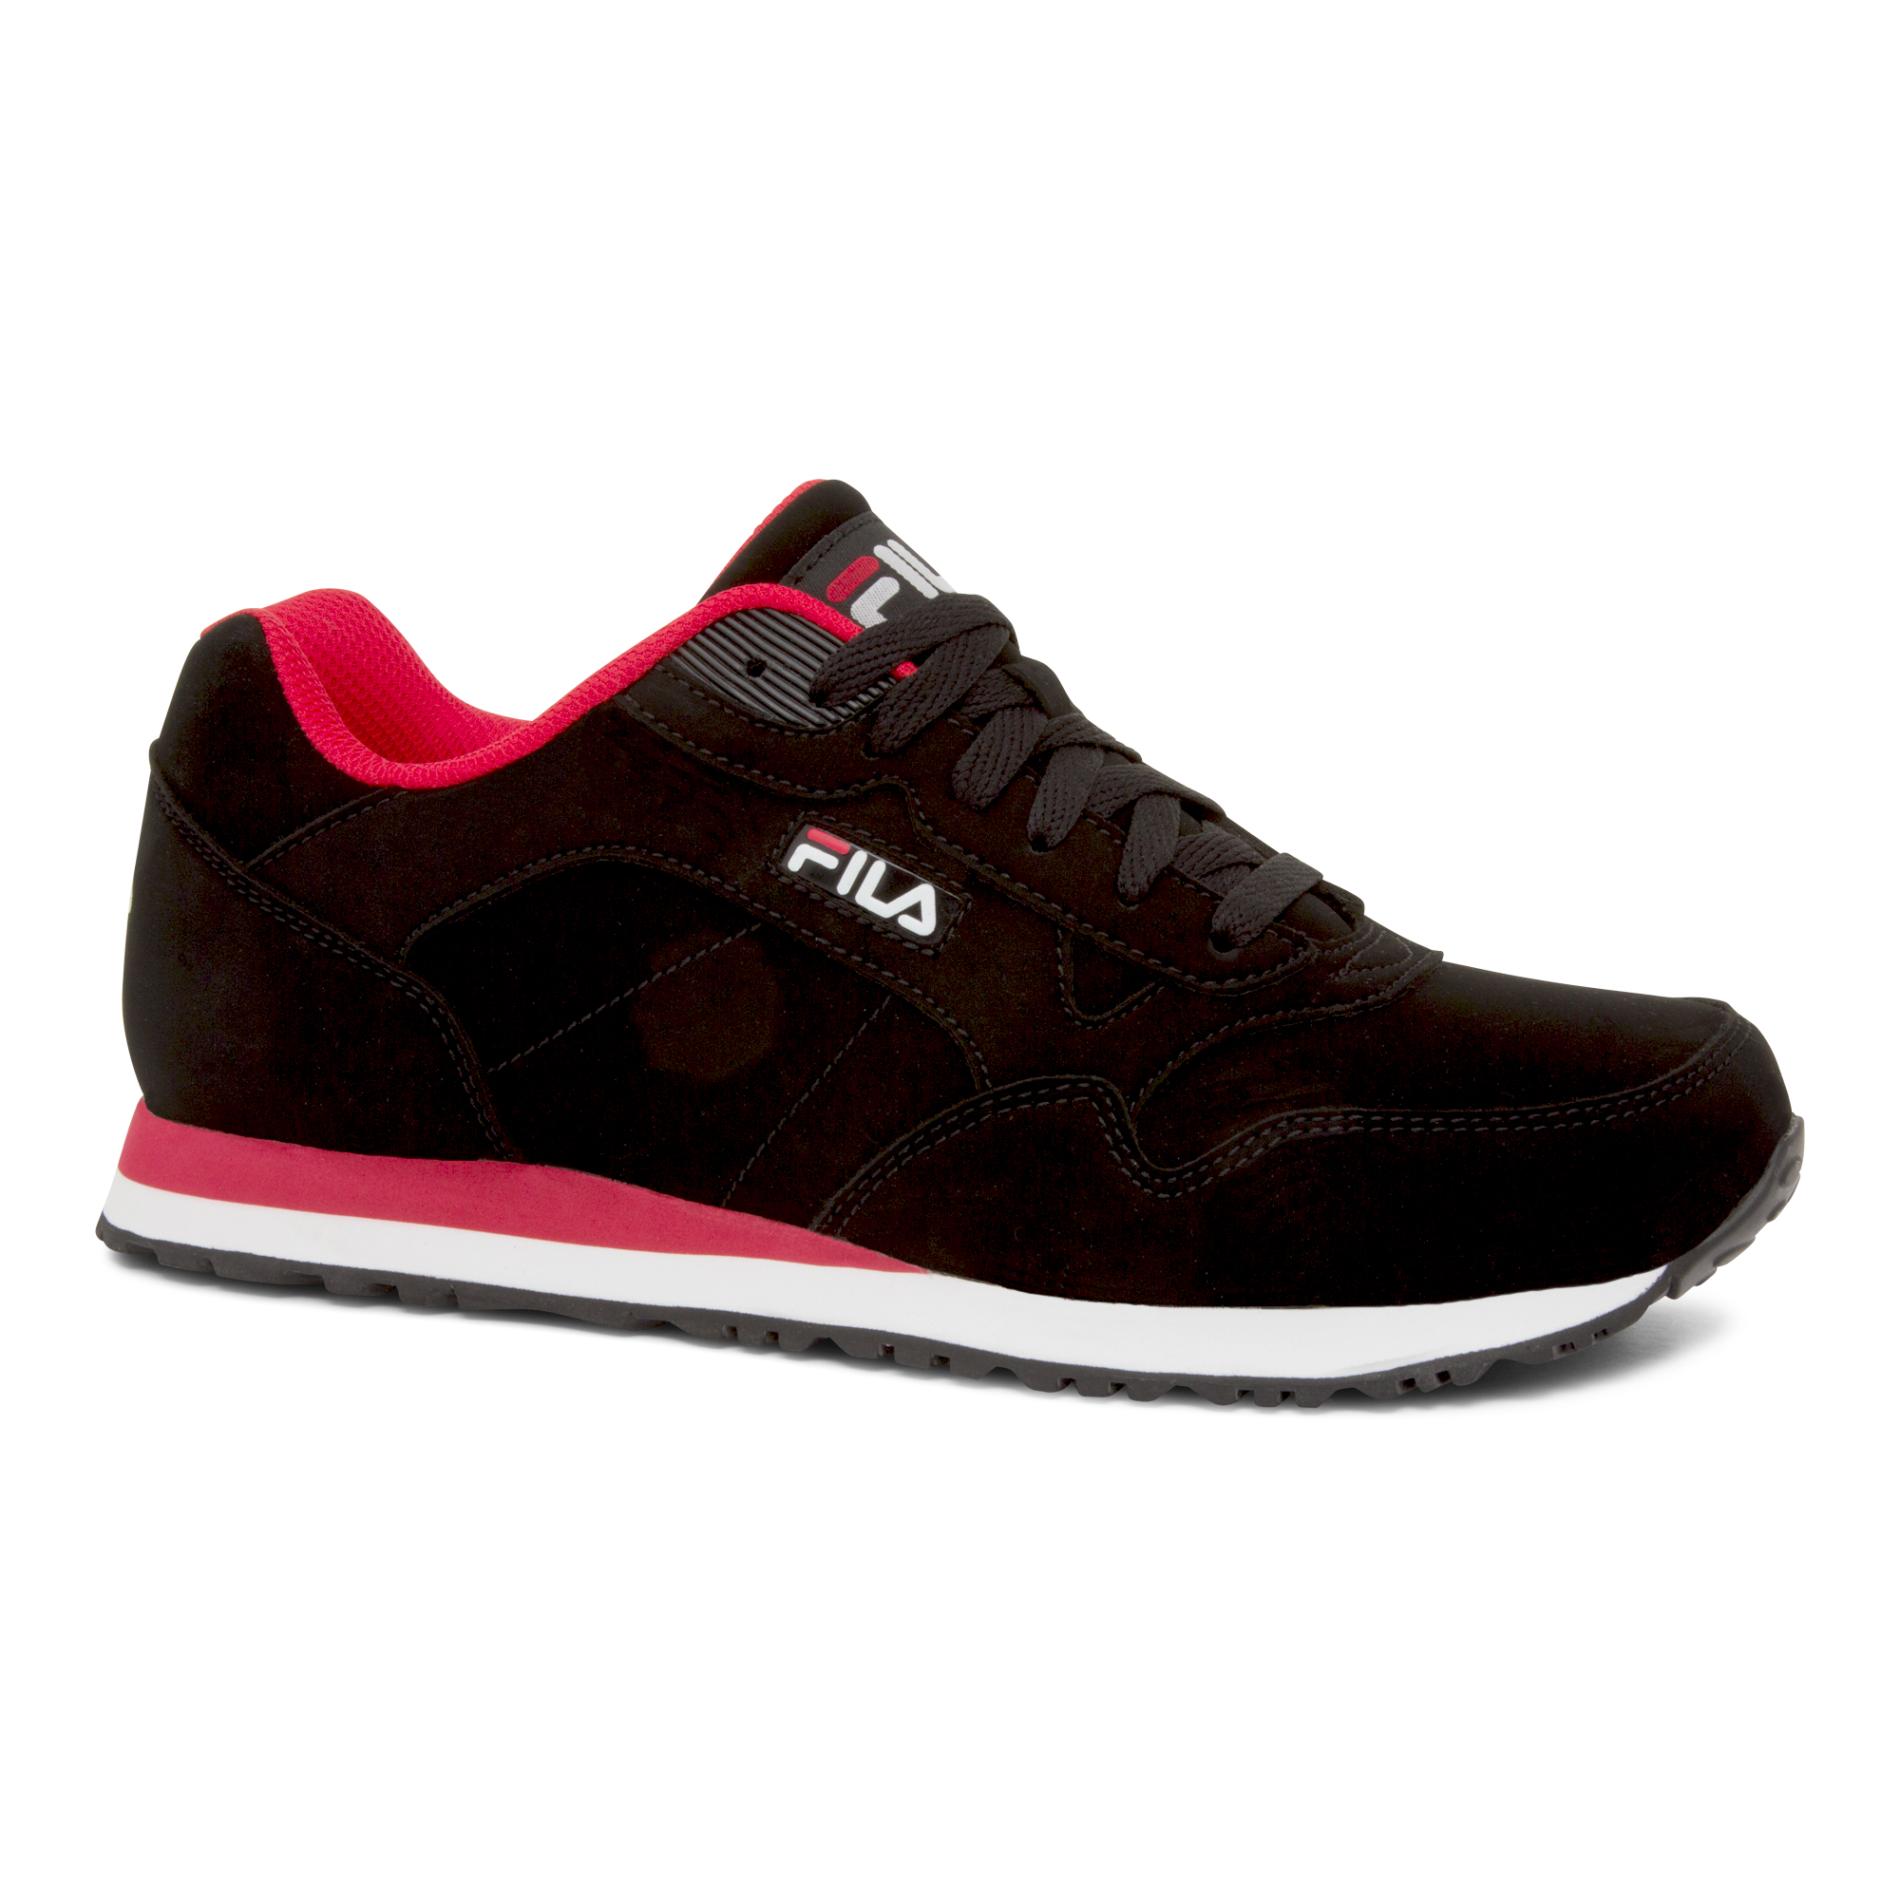 Fila Men's Cress Athletic Shoe - Black/Red